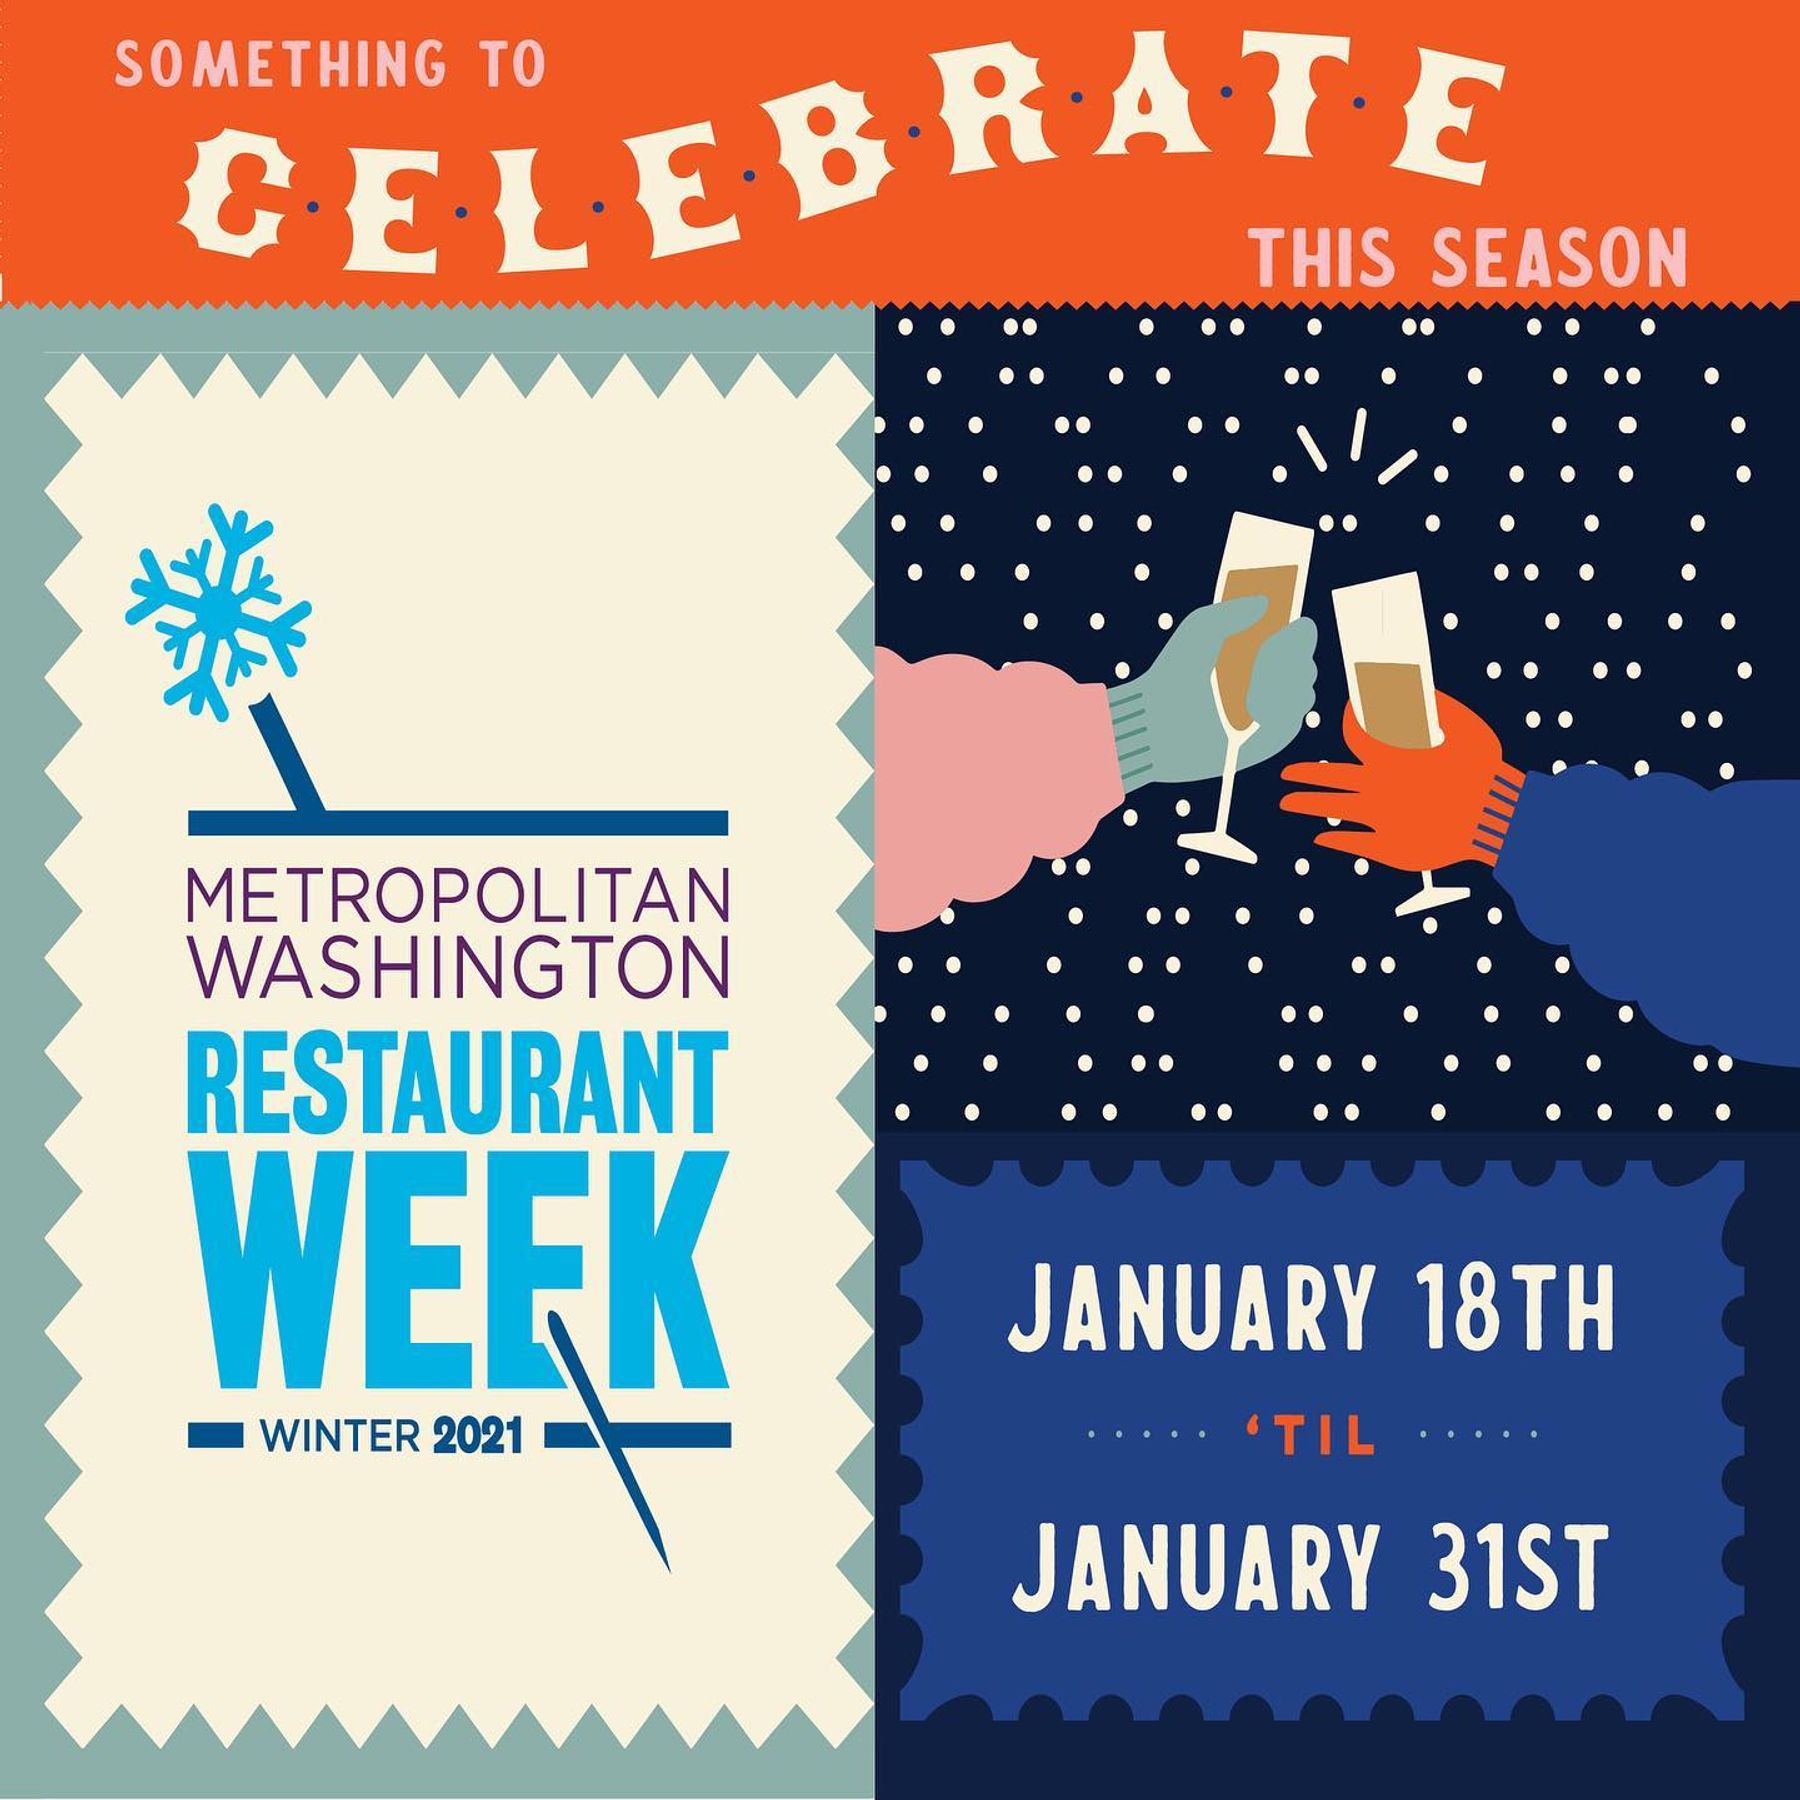 Metropolitan Washington Restaurant Week Winter 2021